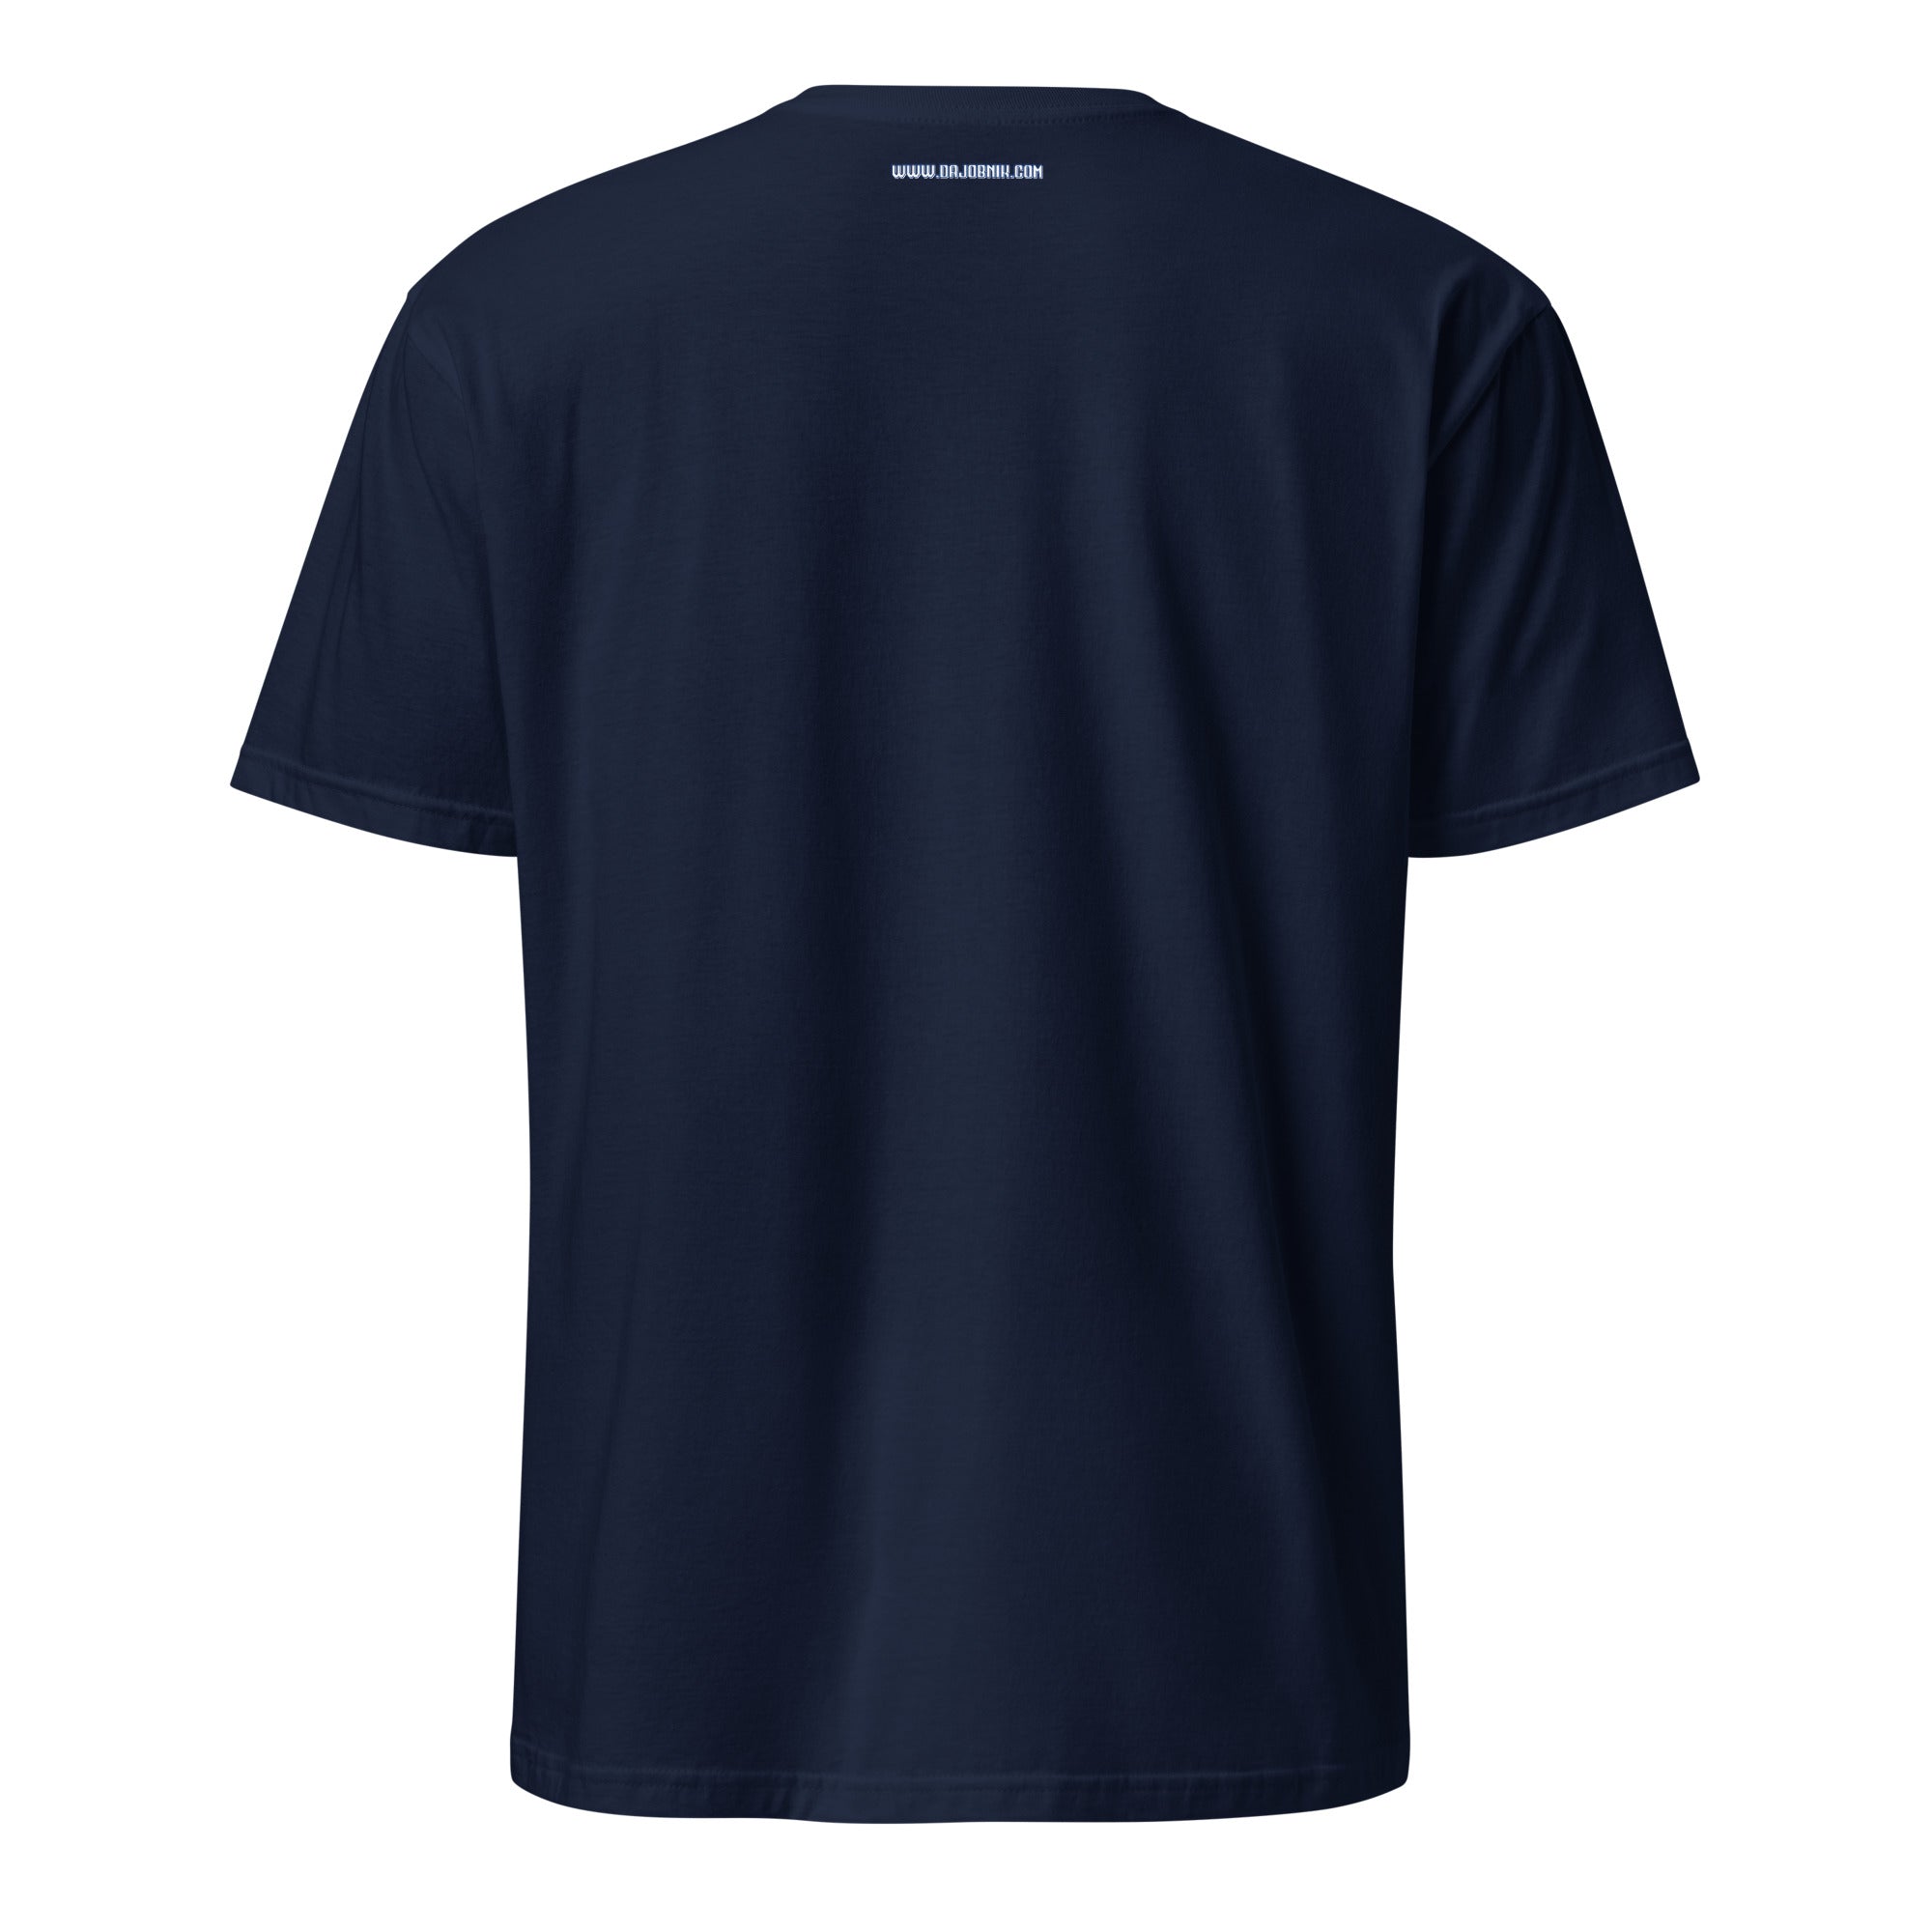 Dajobnik Official Unisex T-Shirt Navy 02 | Dajobnik